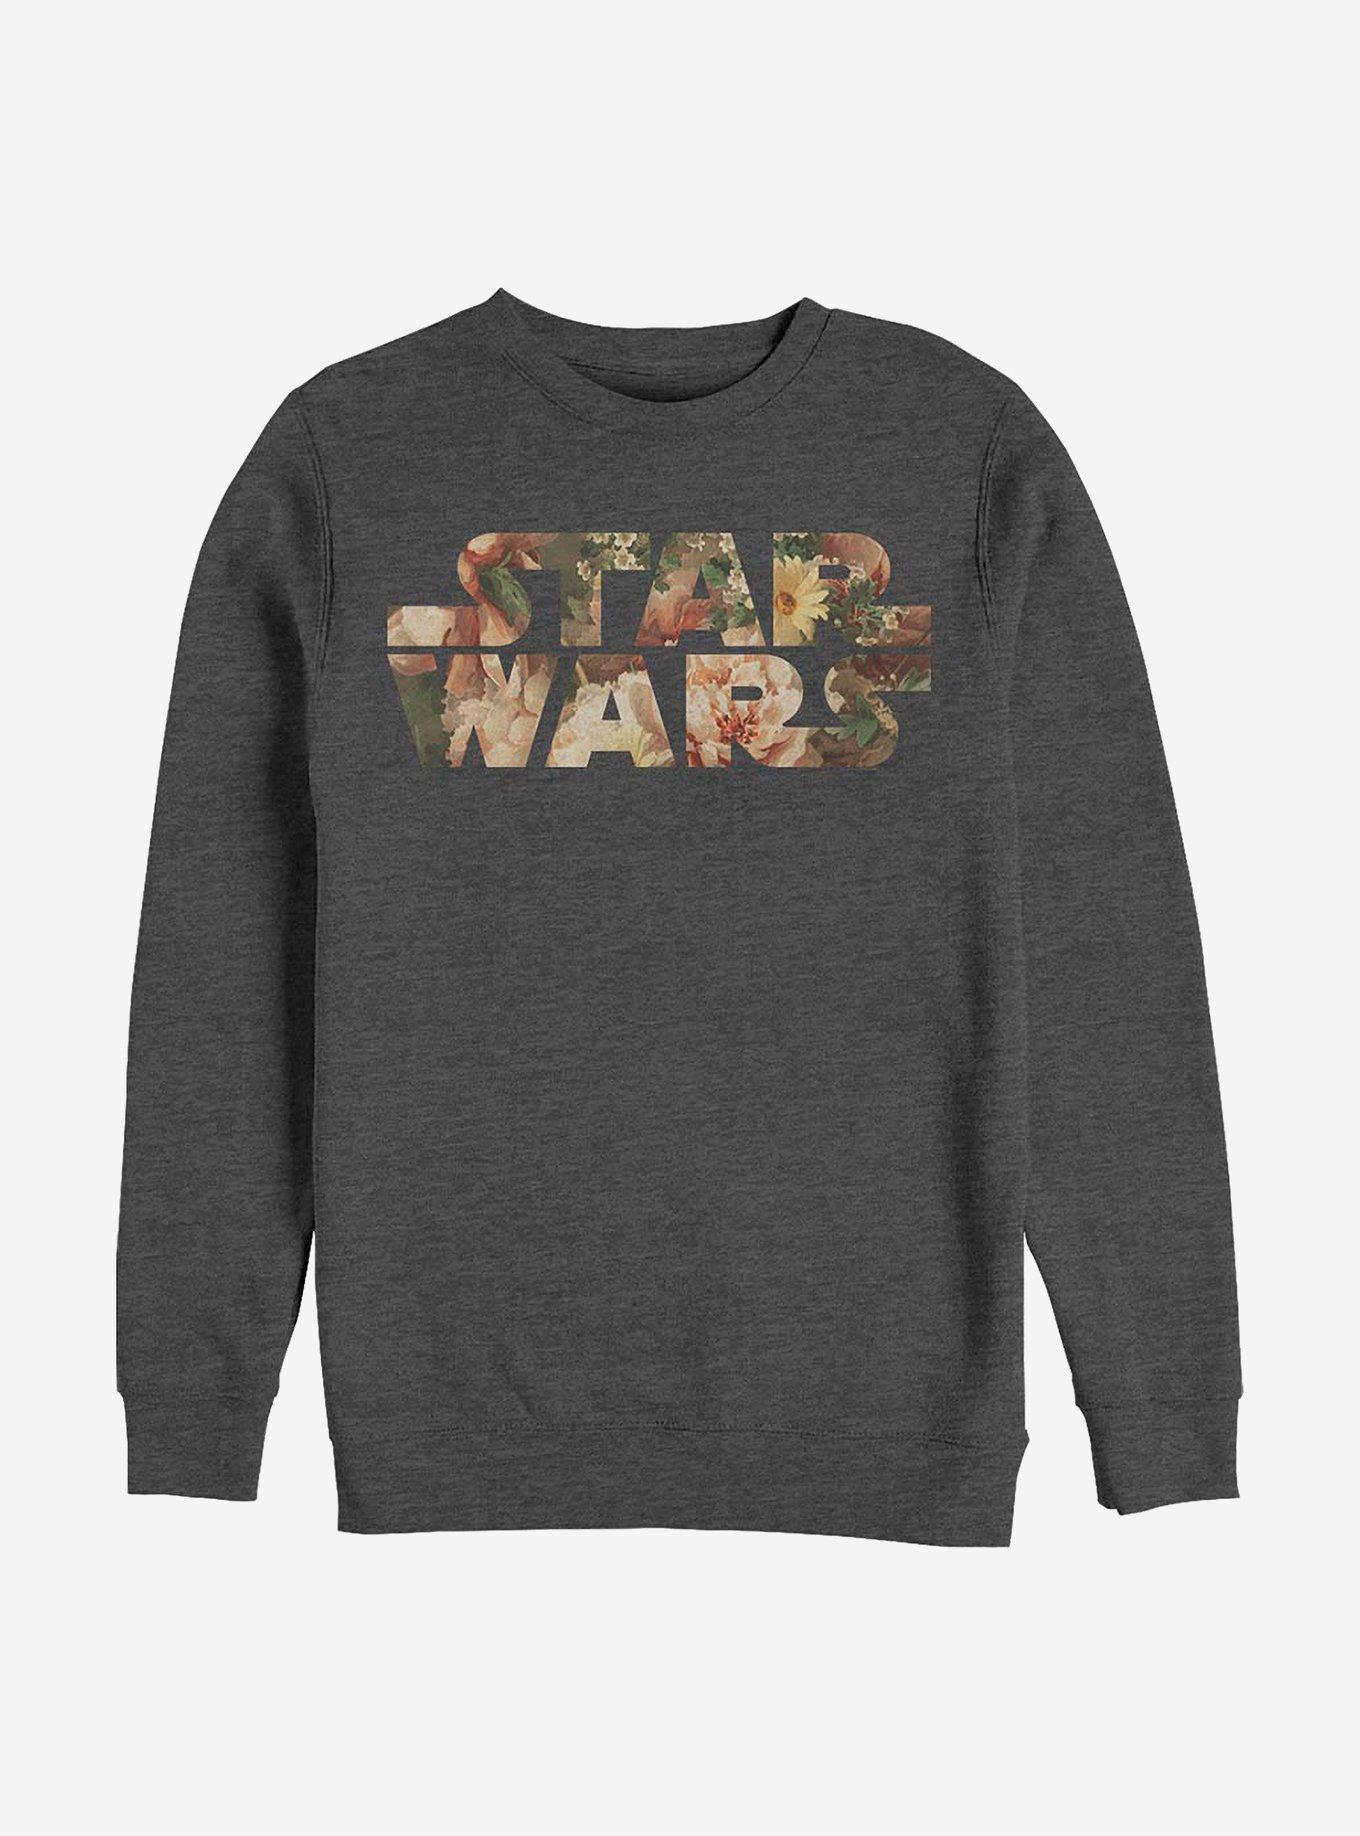 Star Wars Floral Logo Crew Sweatshirt, CHAR HTR, hi-res